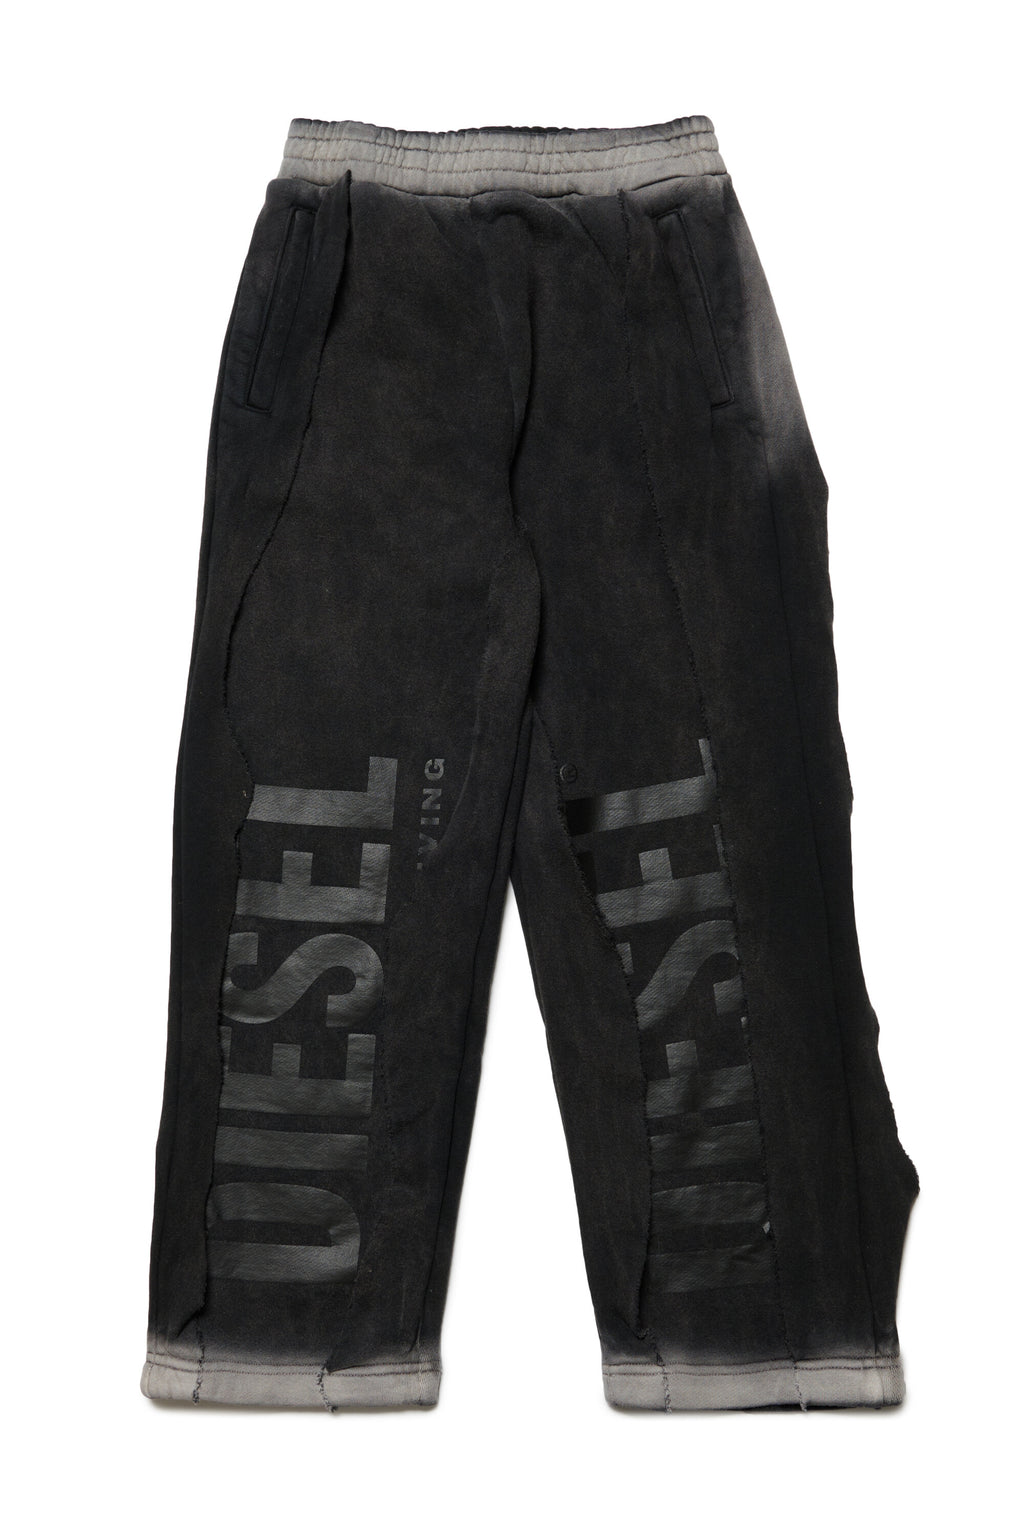 Pantalones con marca en chándal  de doble capa